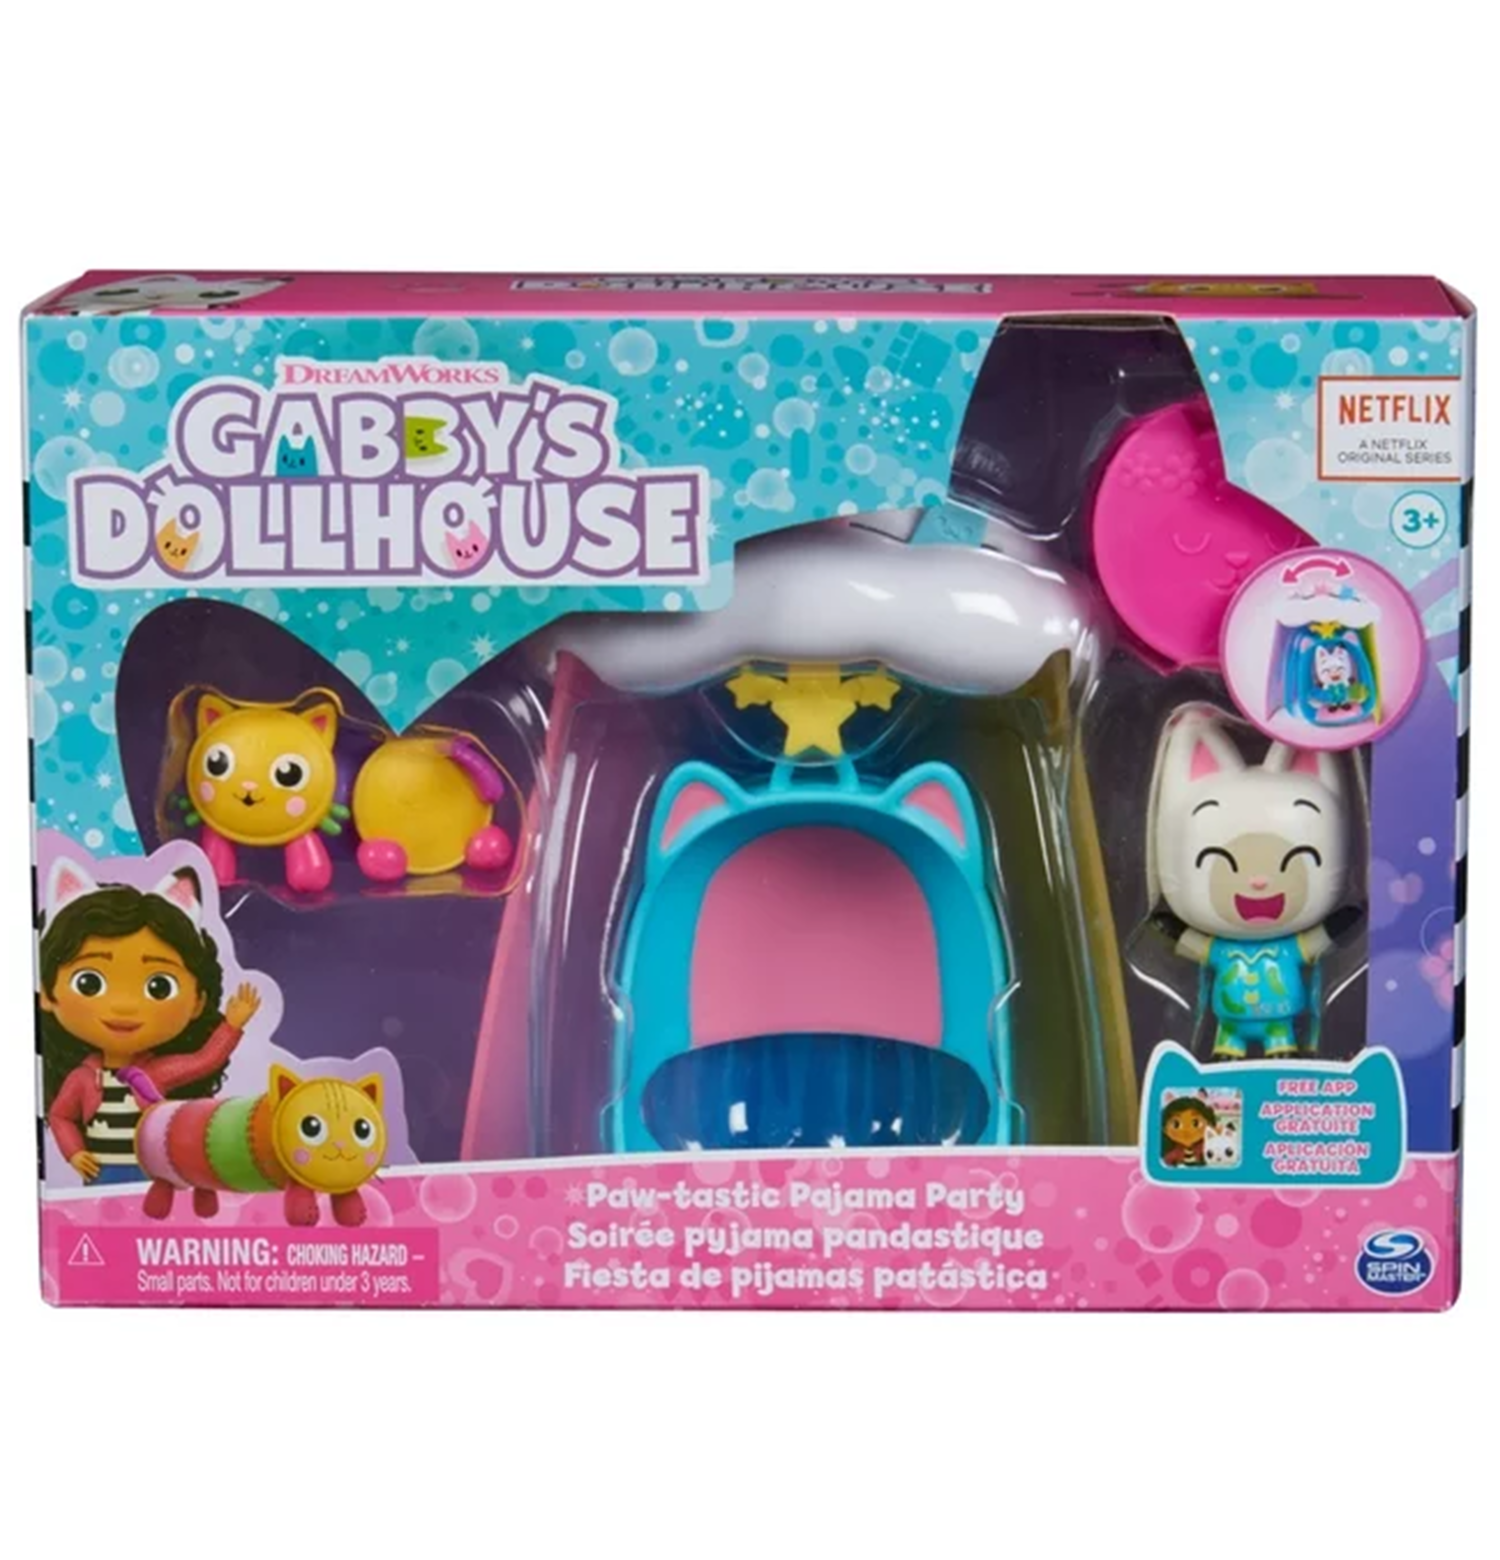 Gabby's Dollhouse Paw-Tastic Pajama Party Exclusive Playset